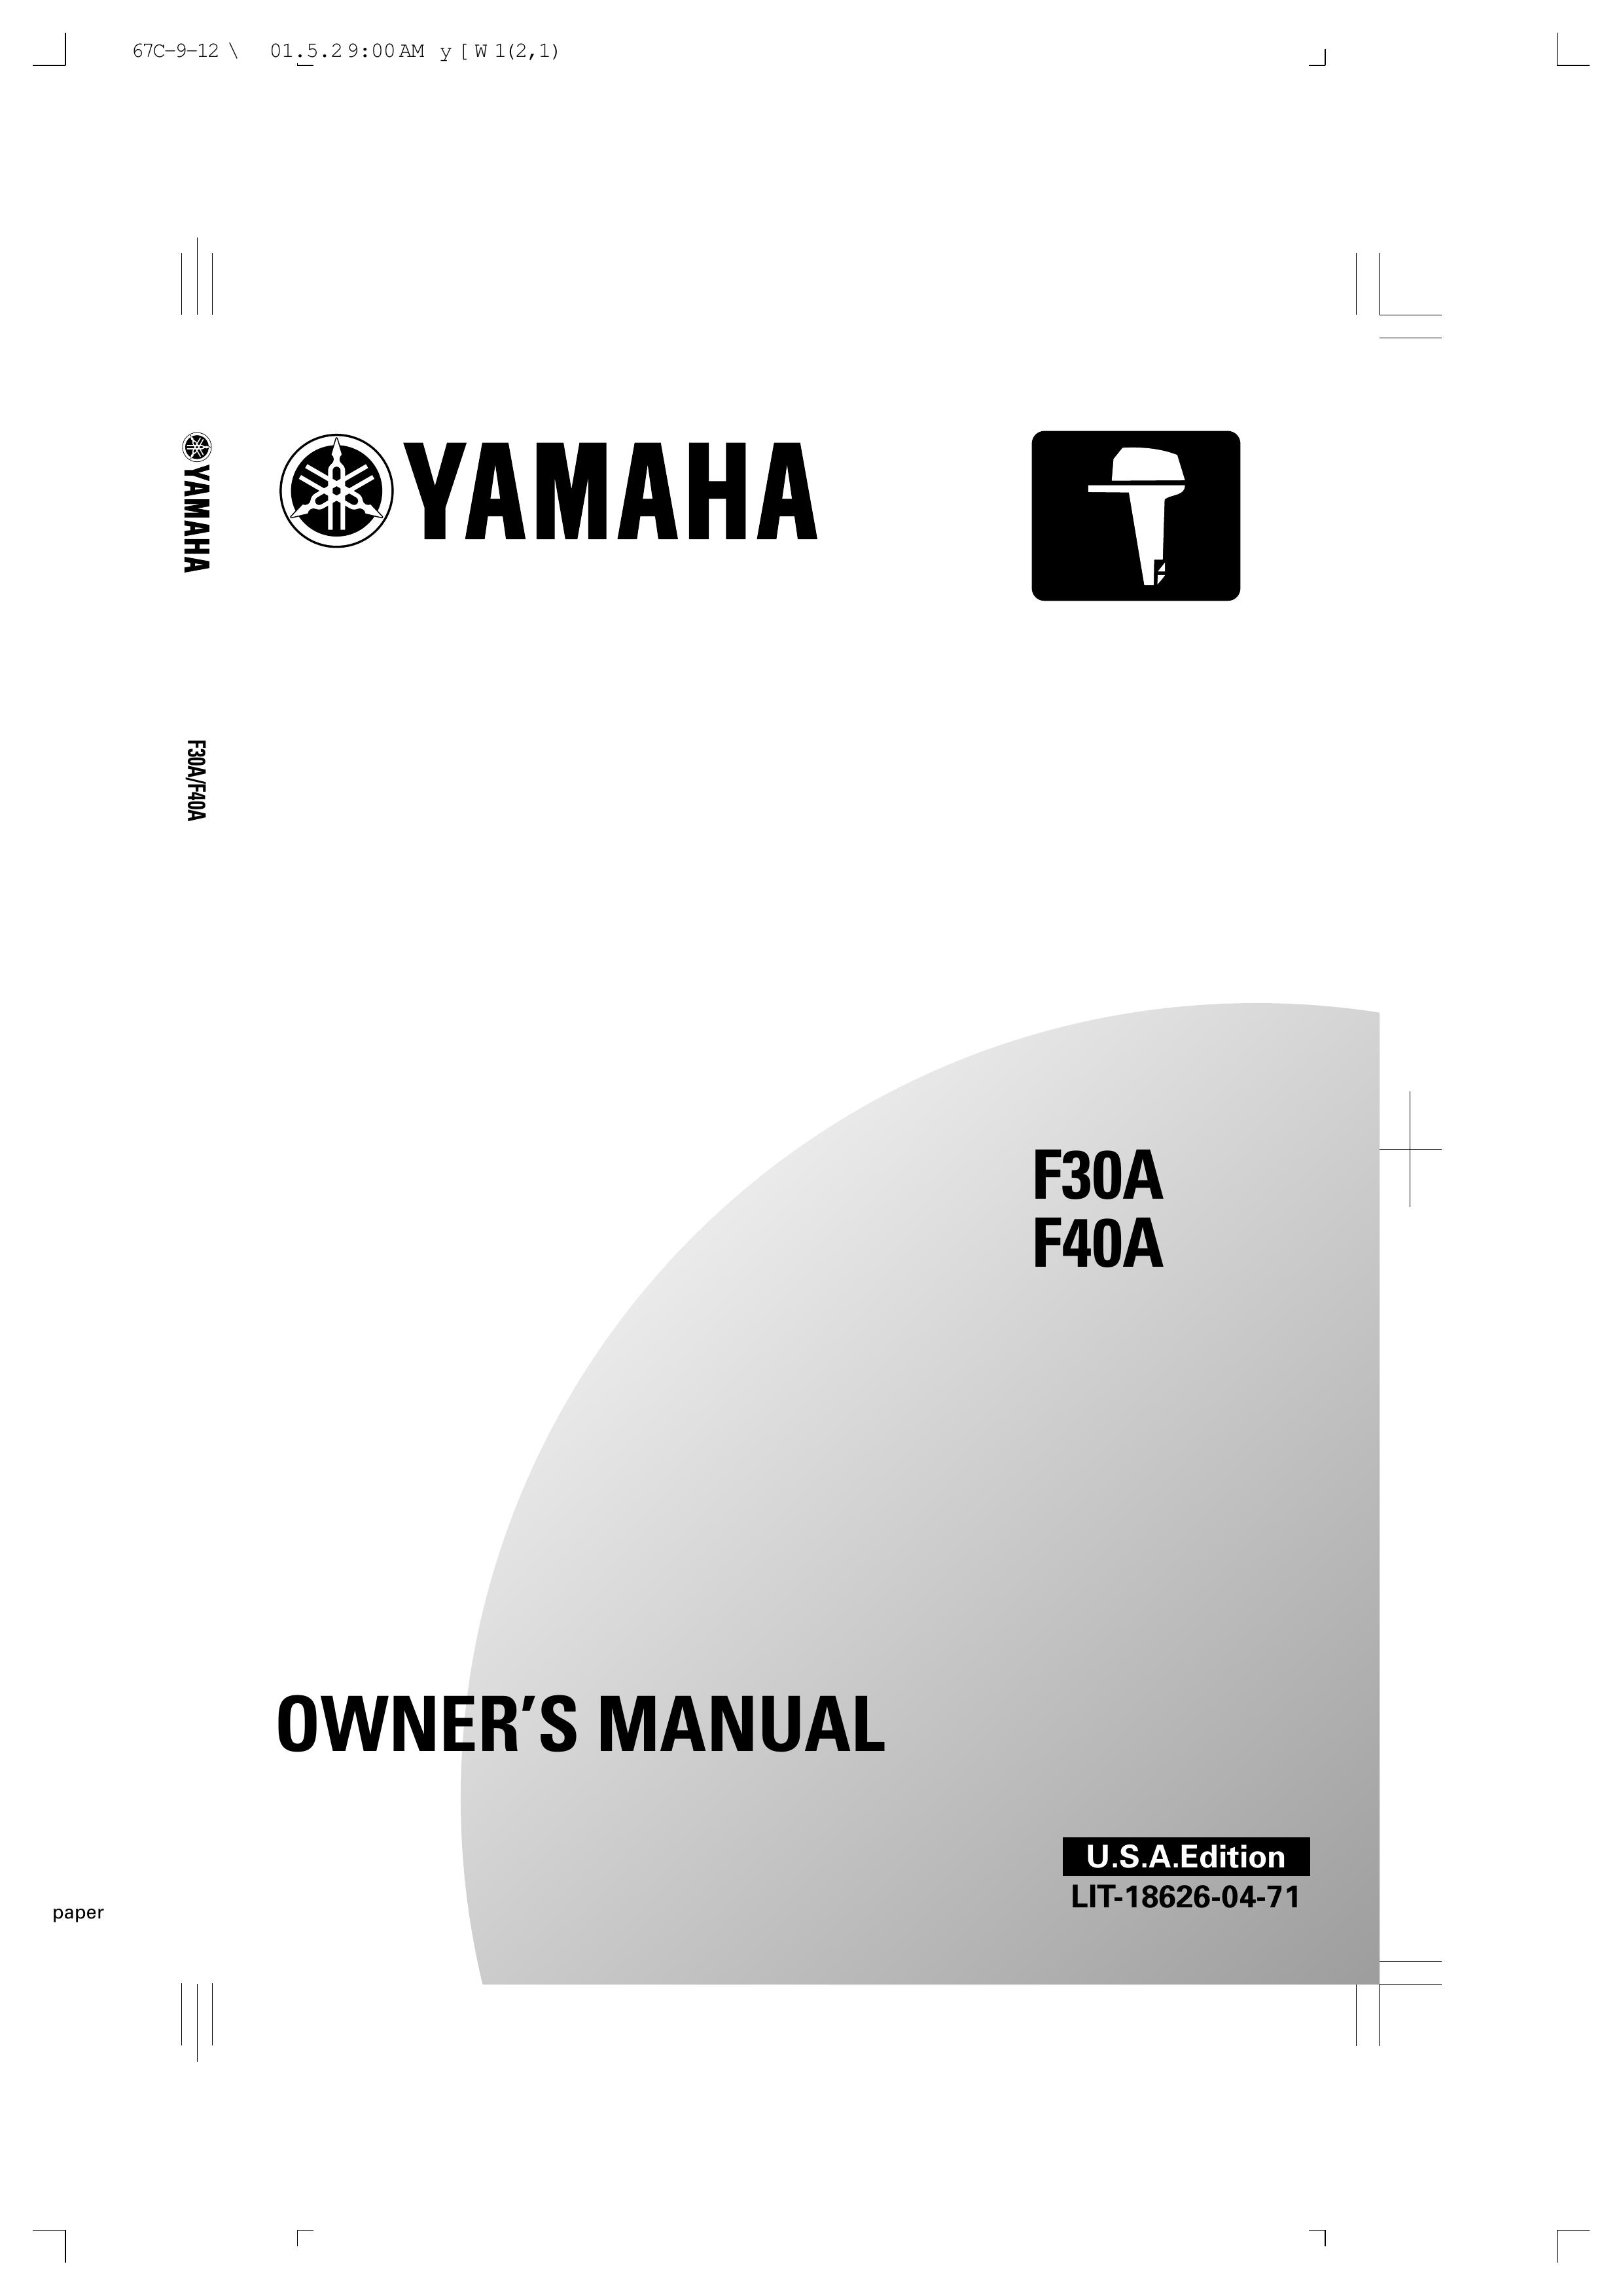 Yamaha F40A Outboard Motor User Manual